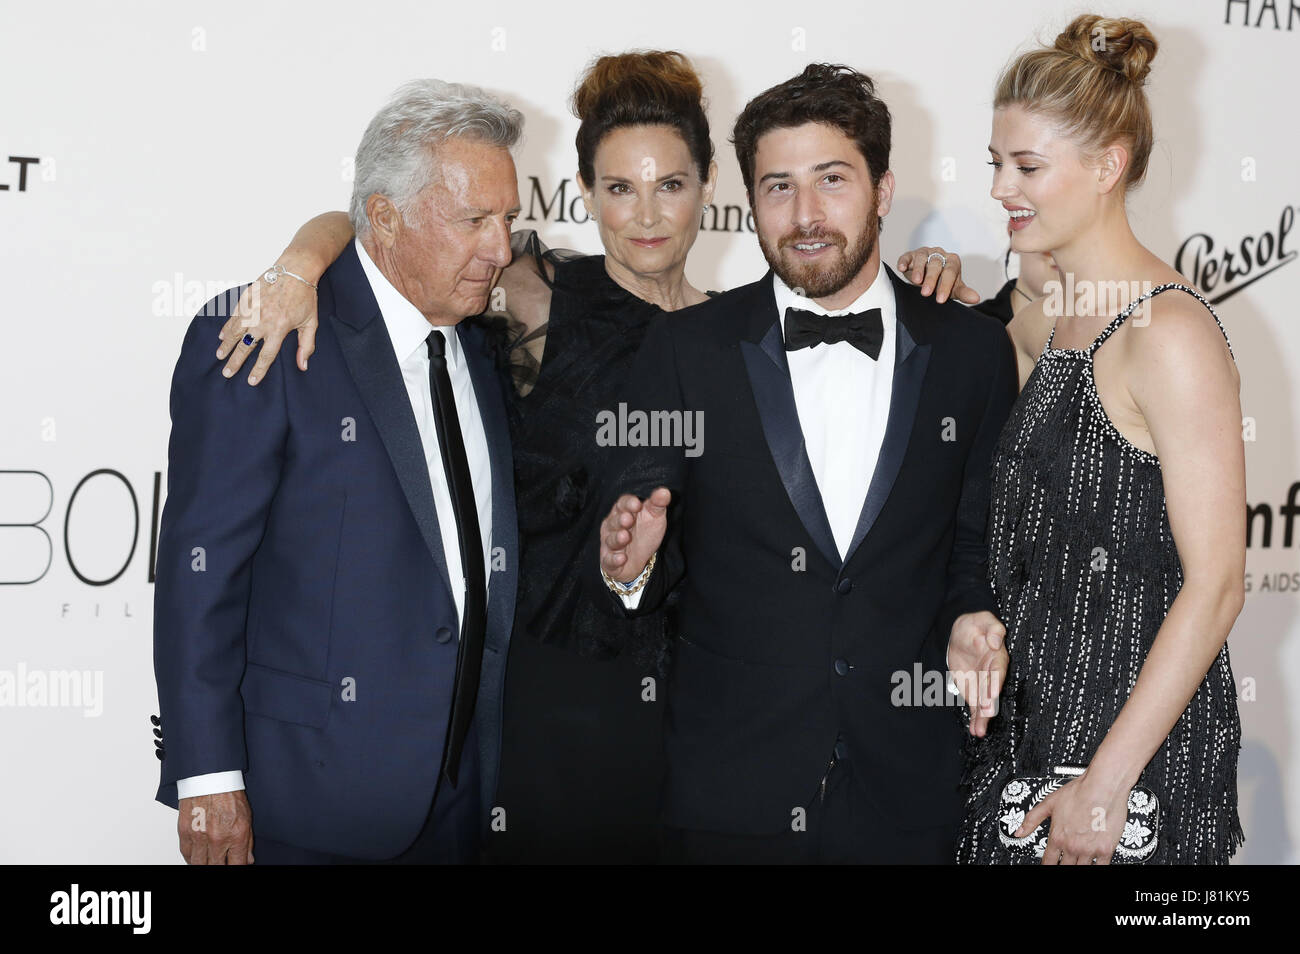 Dustin Hoffman, Lisa Hoffman, Jake Hoffman e valutazione che frequentano l'amfAR's 24th Cinema contro Aids Gala durante il settantesimo Cannes Film Festival a Hotel du Cap-Eden-Roc in Antibes Maggio 25, 2017 | Verwendung weltweit/picture alliance Foto Stock